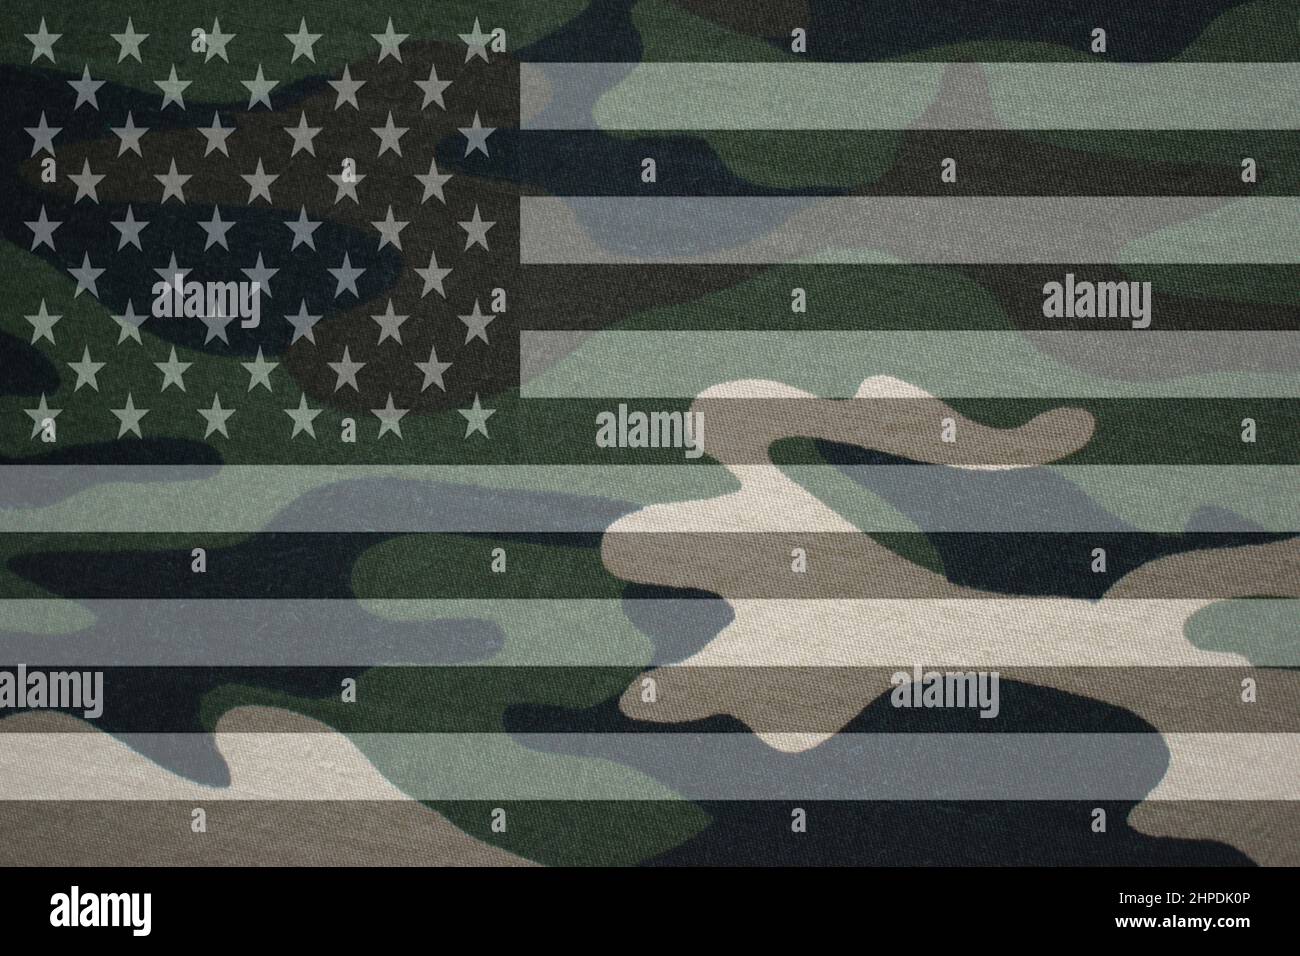 United States of America flag on military camouflage background Stock Photo